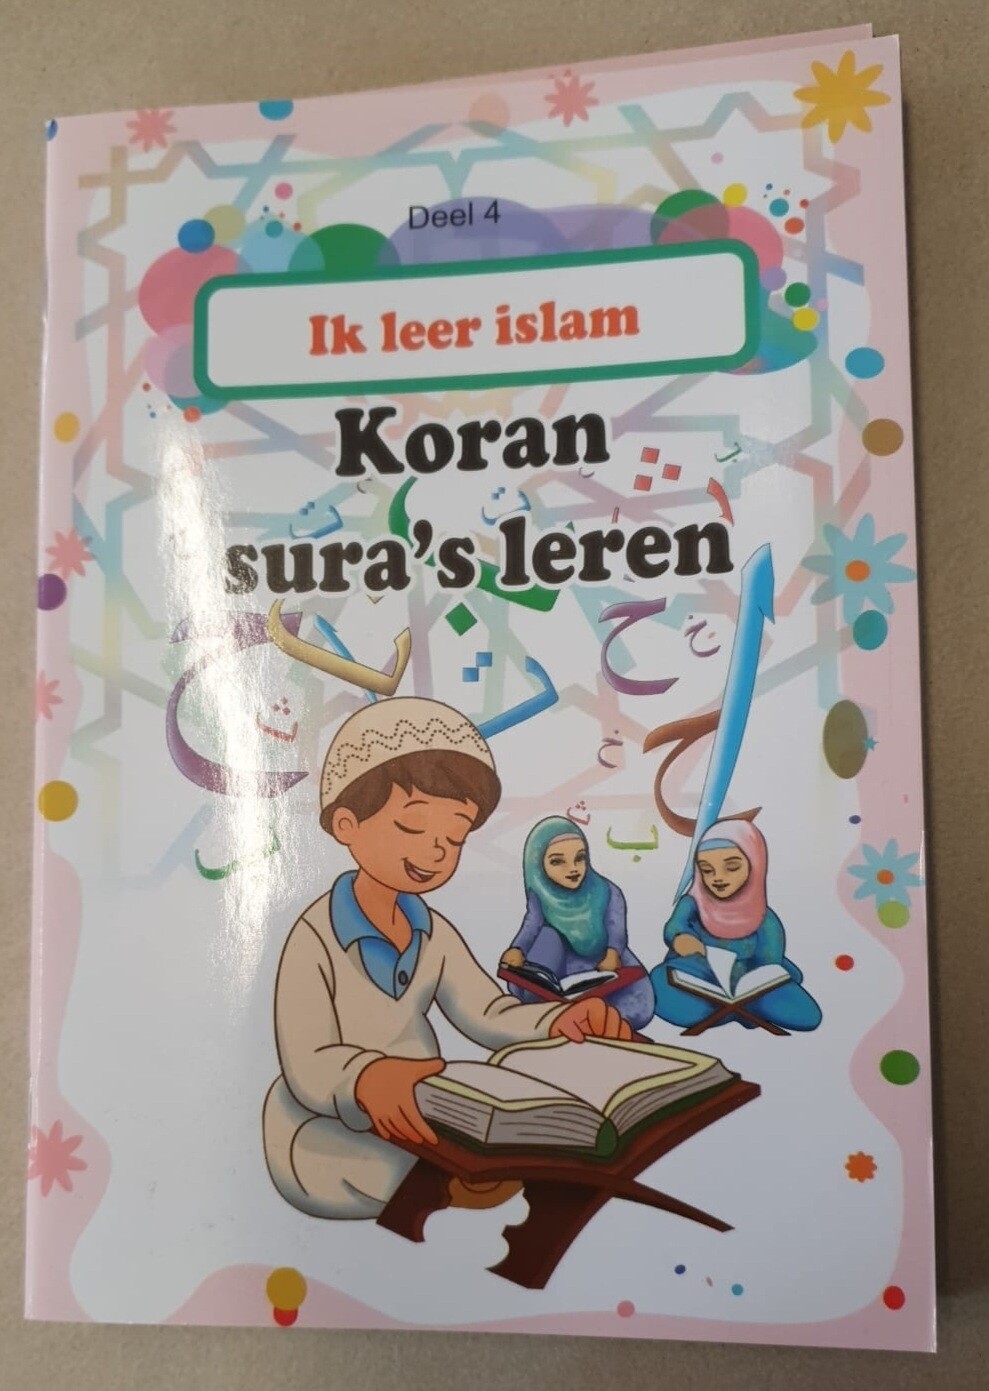 Ik leer islam: Koran sura's leren